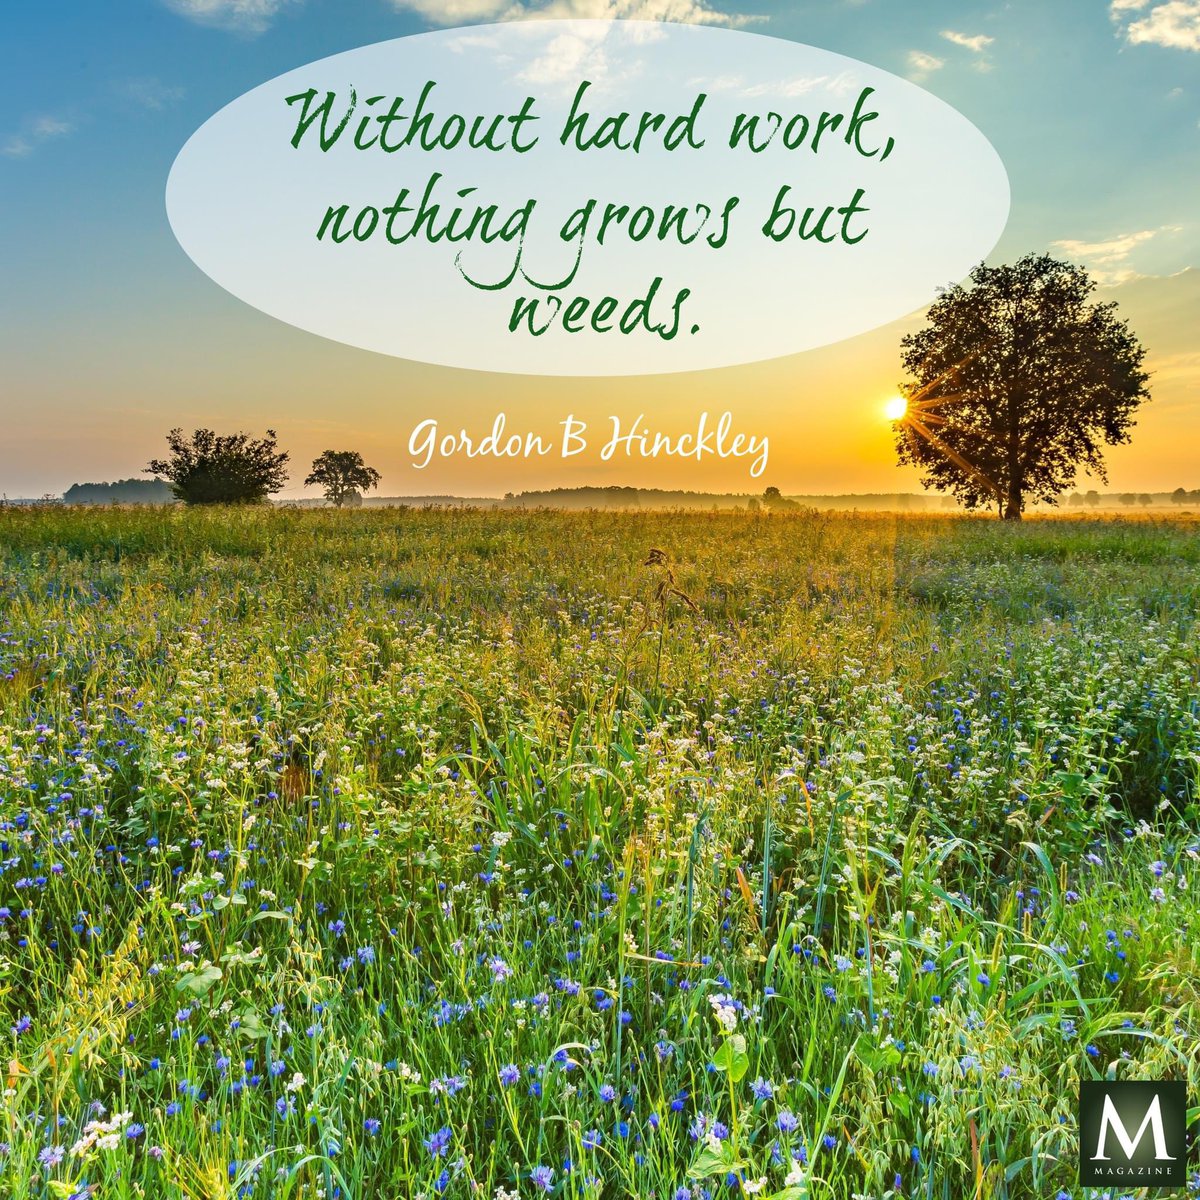 “Without hard work, nothing grows but weeds.” ~ President Gordon B. Hinkley

#HisDay #HearHim #TrustGod #GodLovesYou #ComeUntoChrist #CountOnHim #EmbraceHim #ChildOfGod #ShareGoodness #BestDay #TheChurchOfJesusChristOfLatterDaySaints